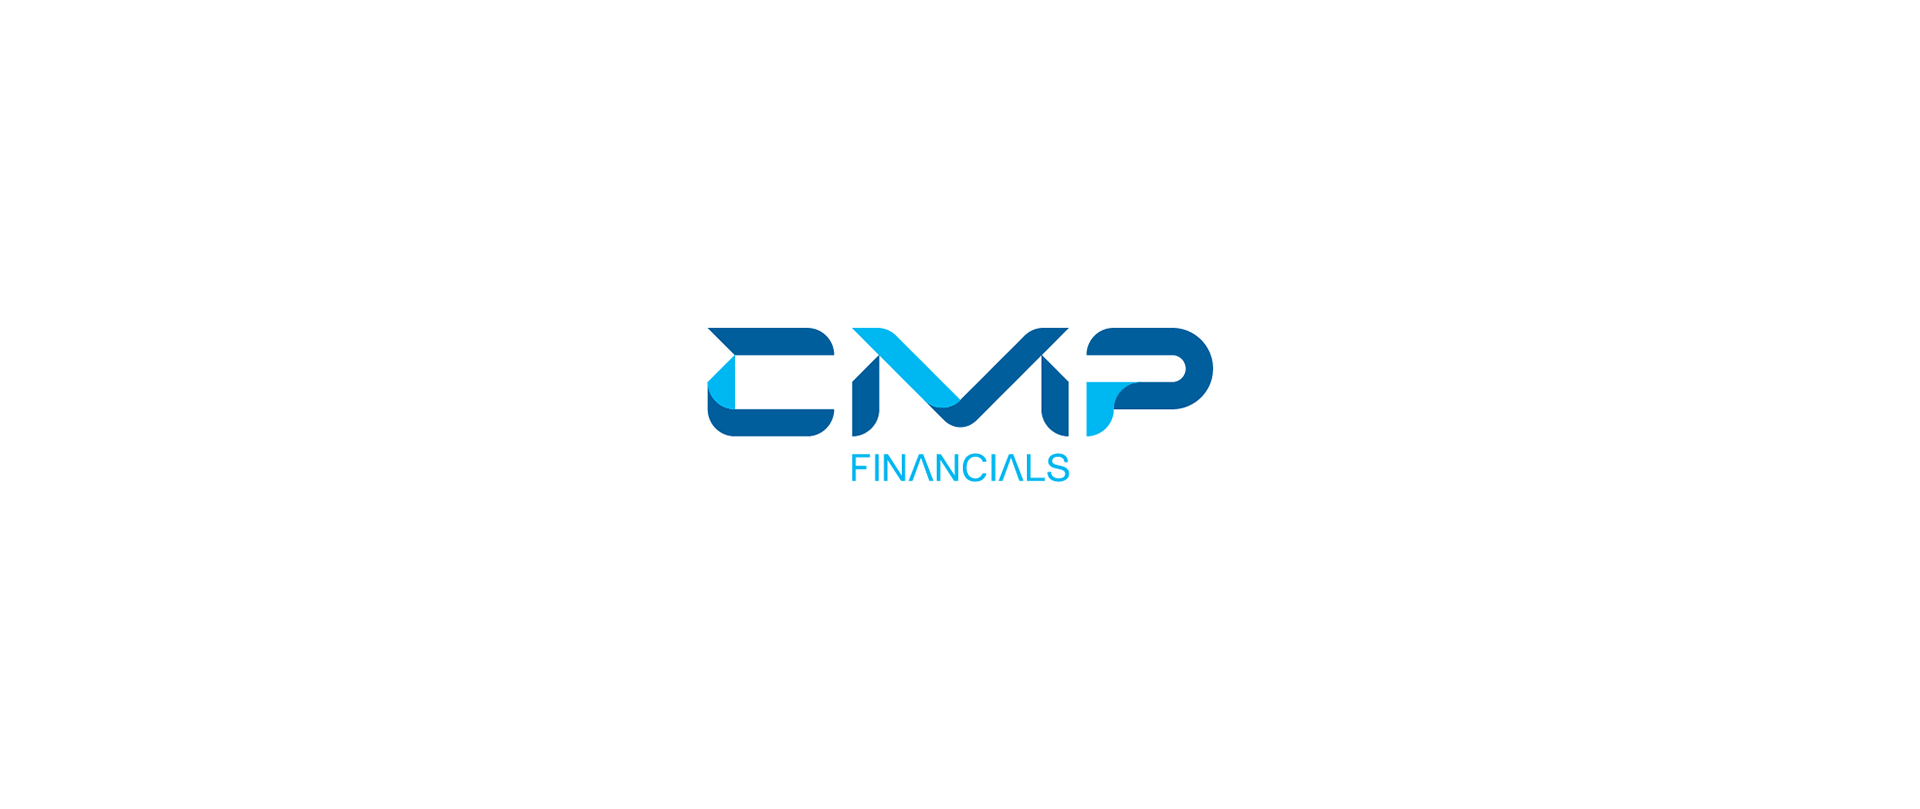 cmp-financials_brandmark